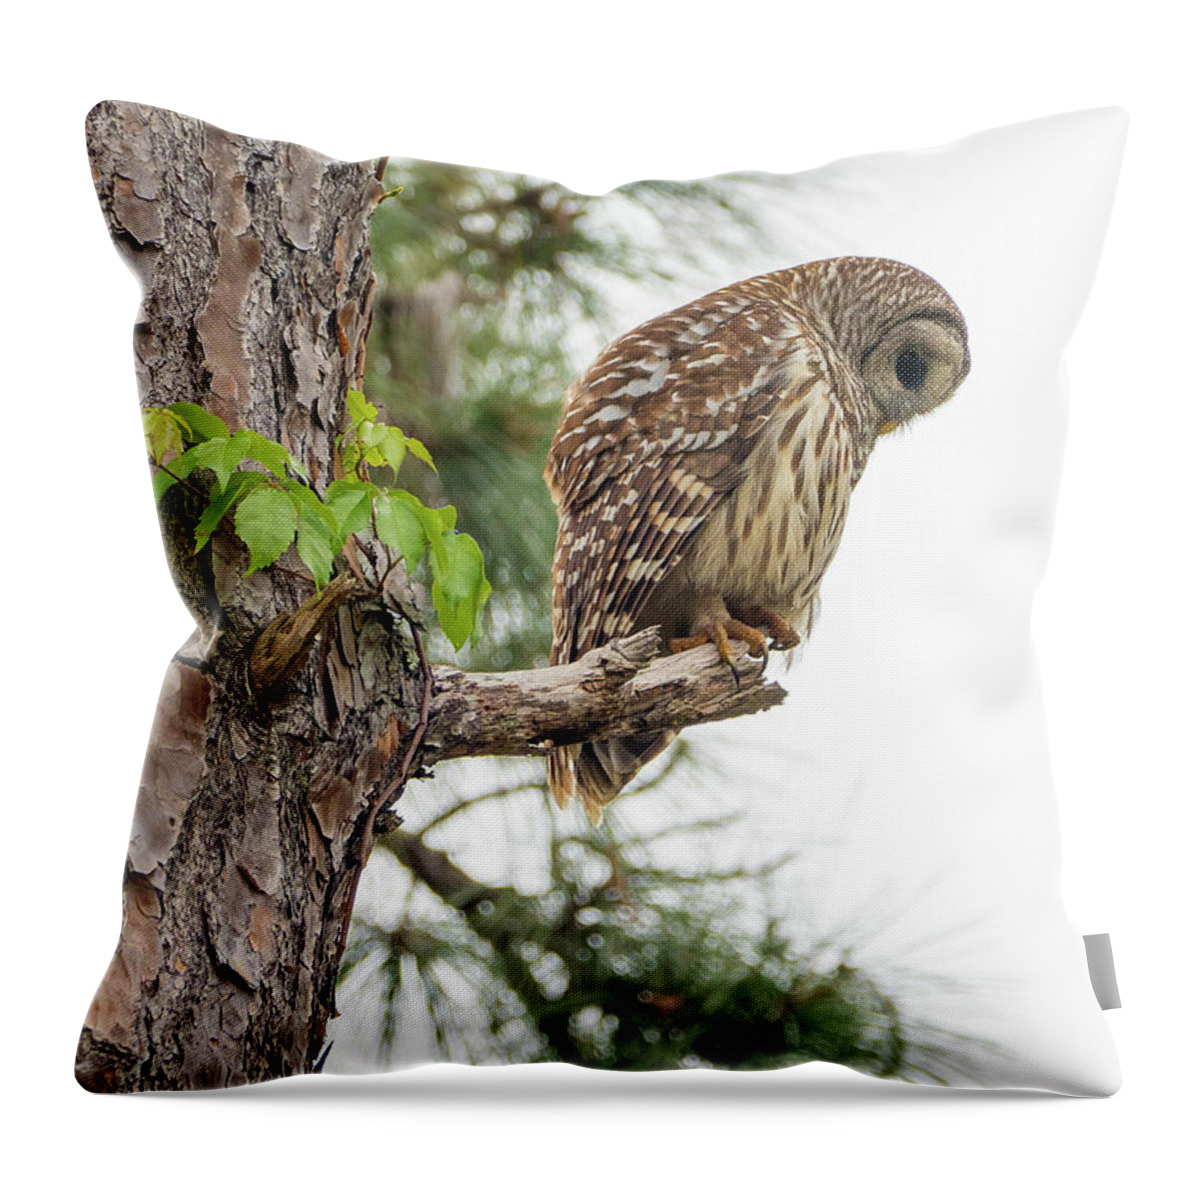 Birds Throw Pillow featuring the photograph Owl by Neil Shapiro